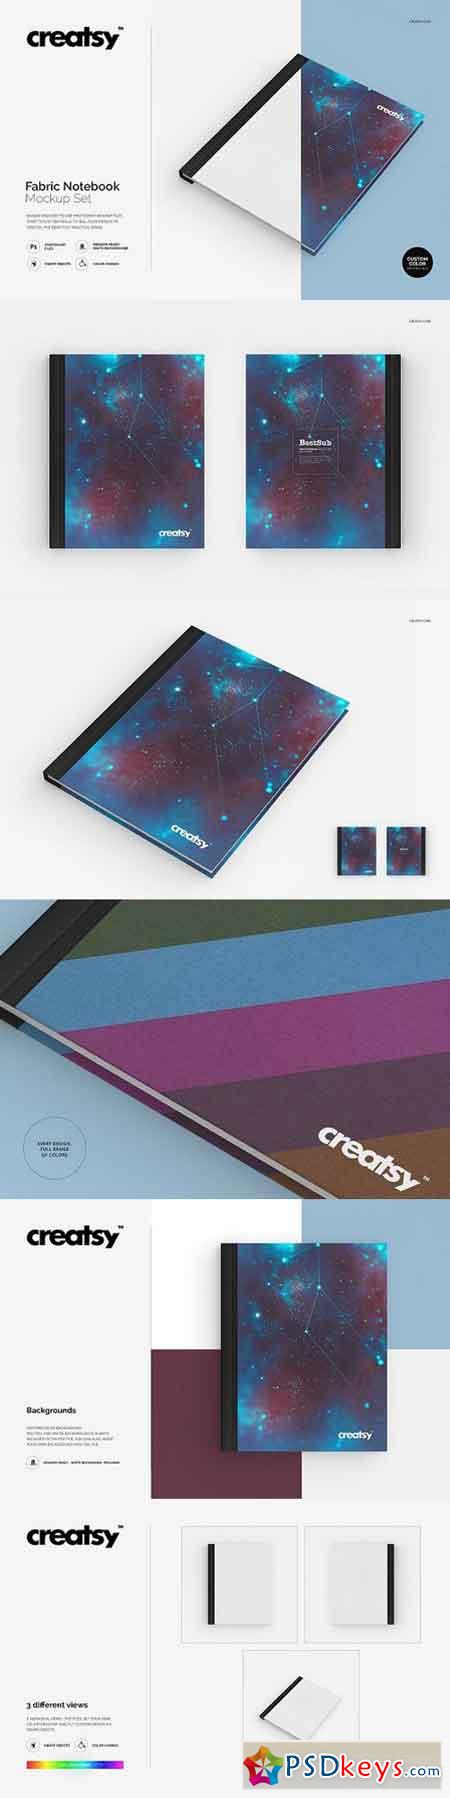 Fabric Notebook Mockup Set 1461792